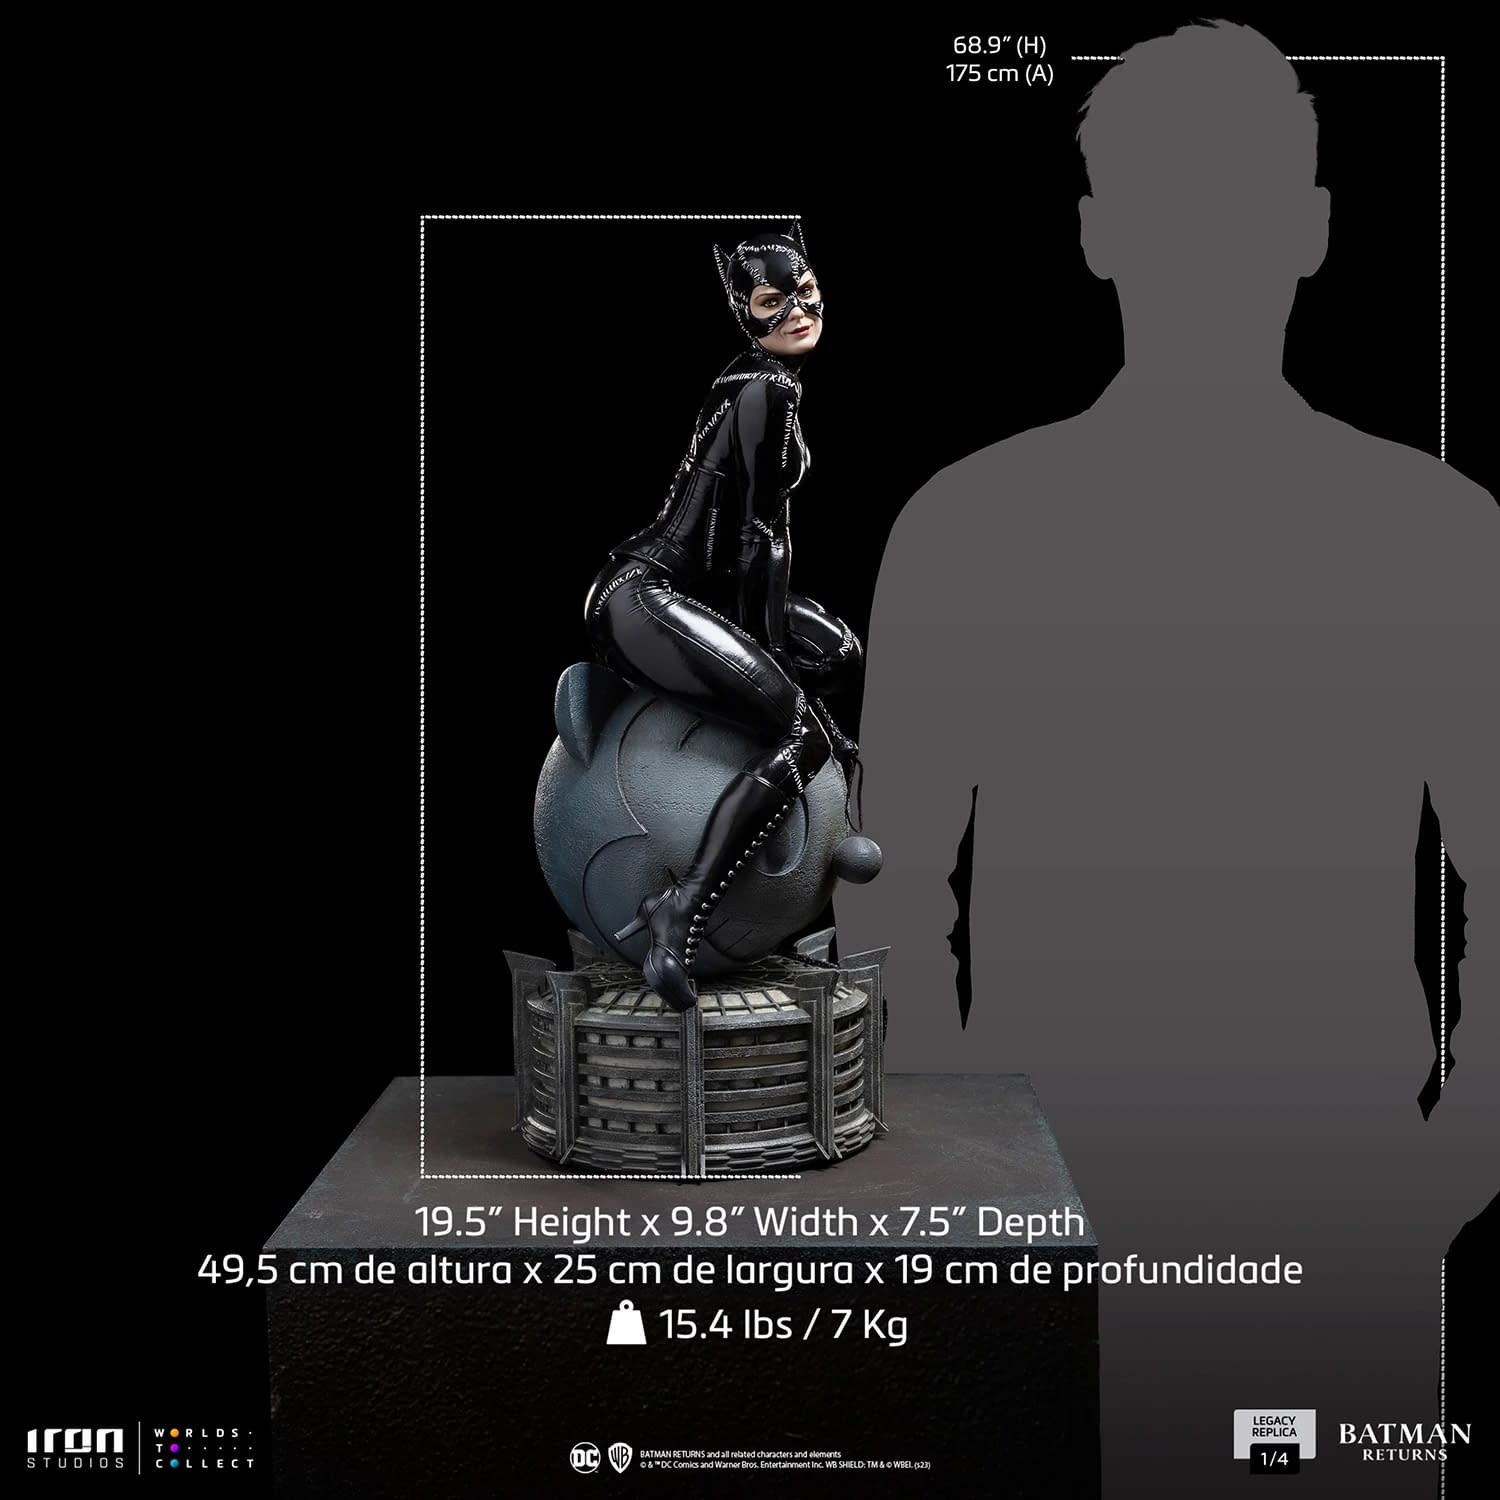 Batman Returns Catwoman Strikes Again with New Iron Studios Statue 